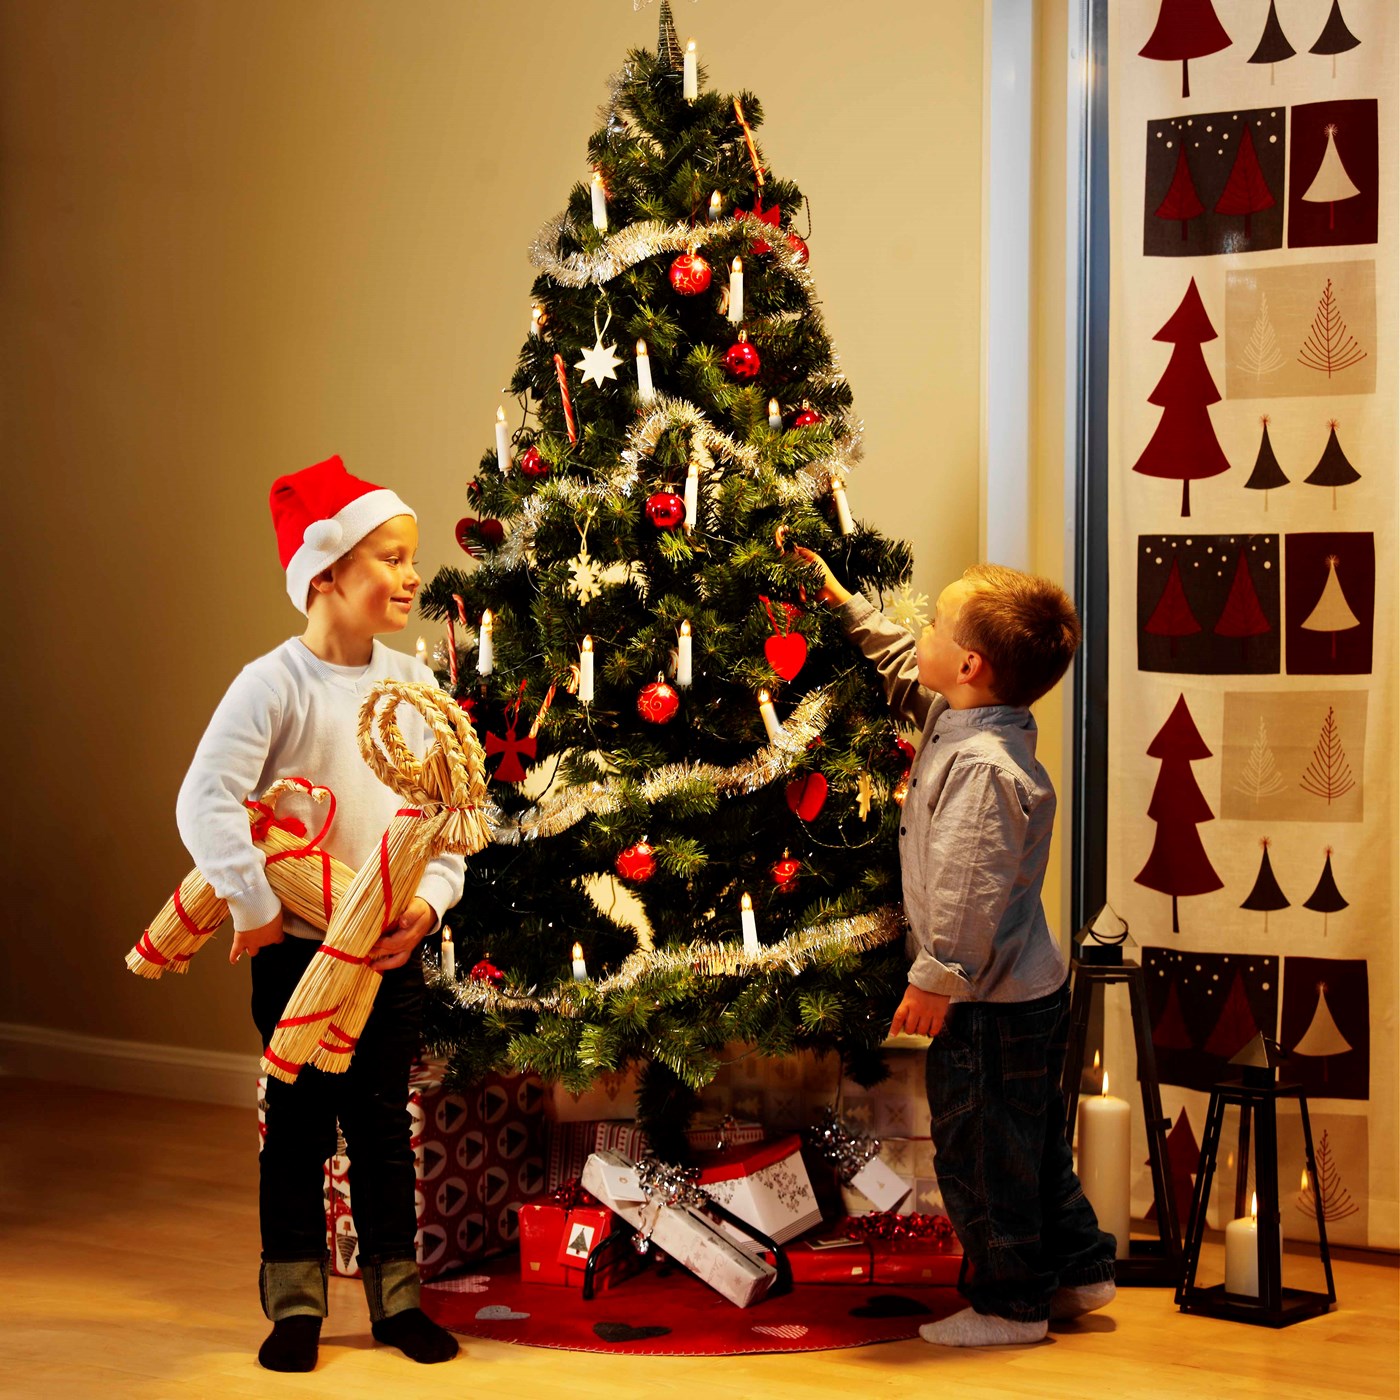 Buy an artificial Christmas tree!